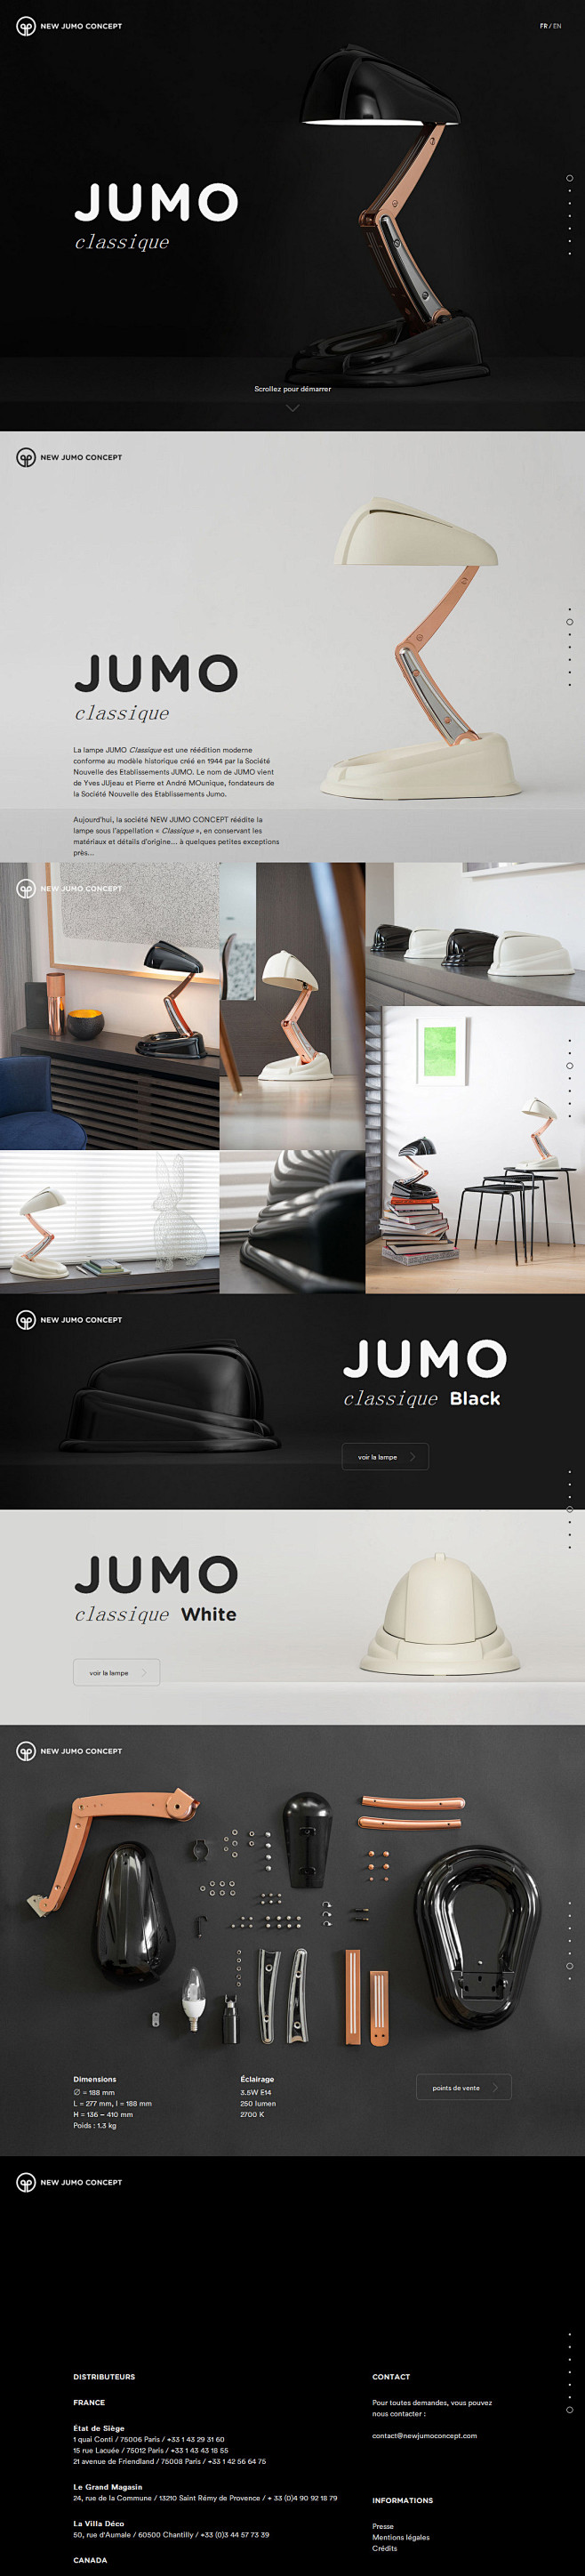 New JUMO Concept产品宣传...